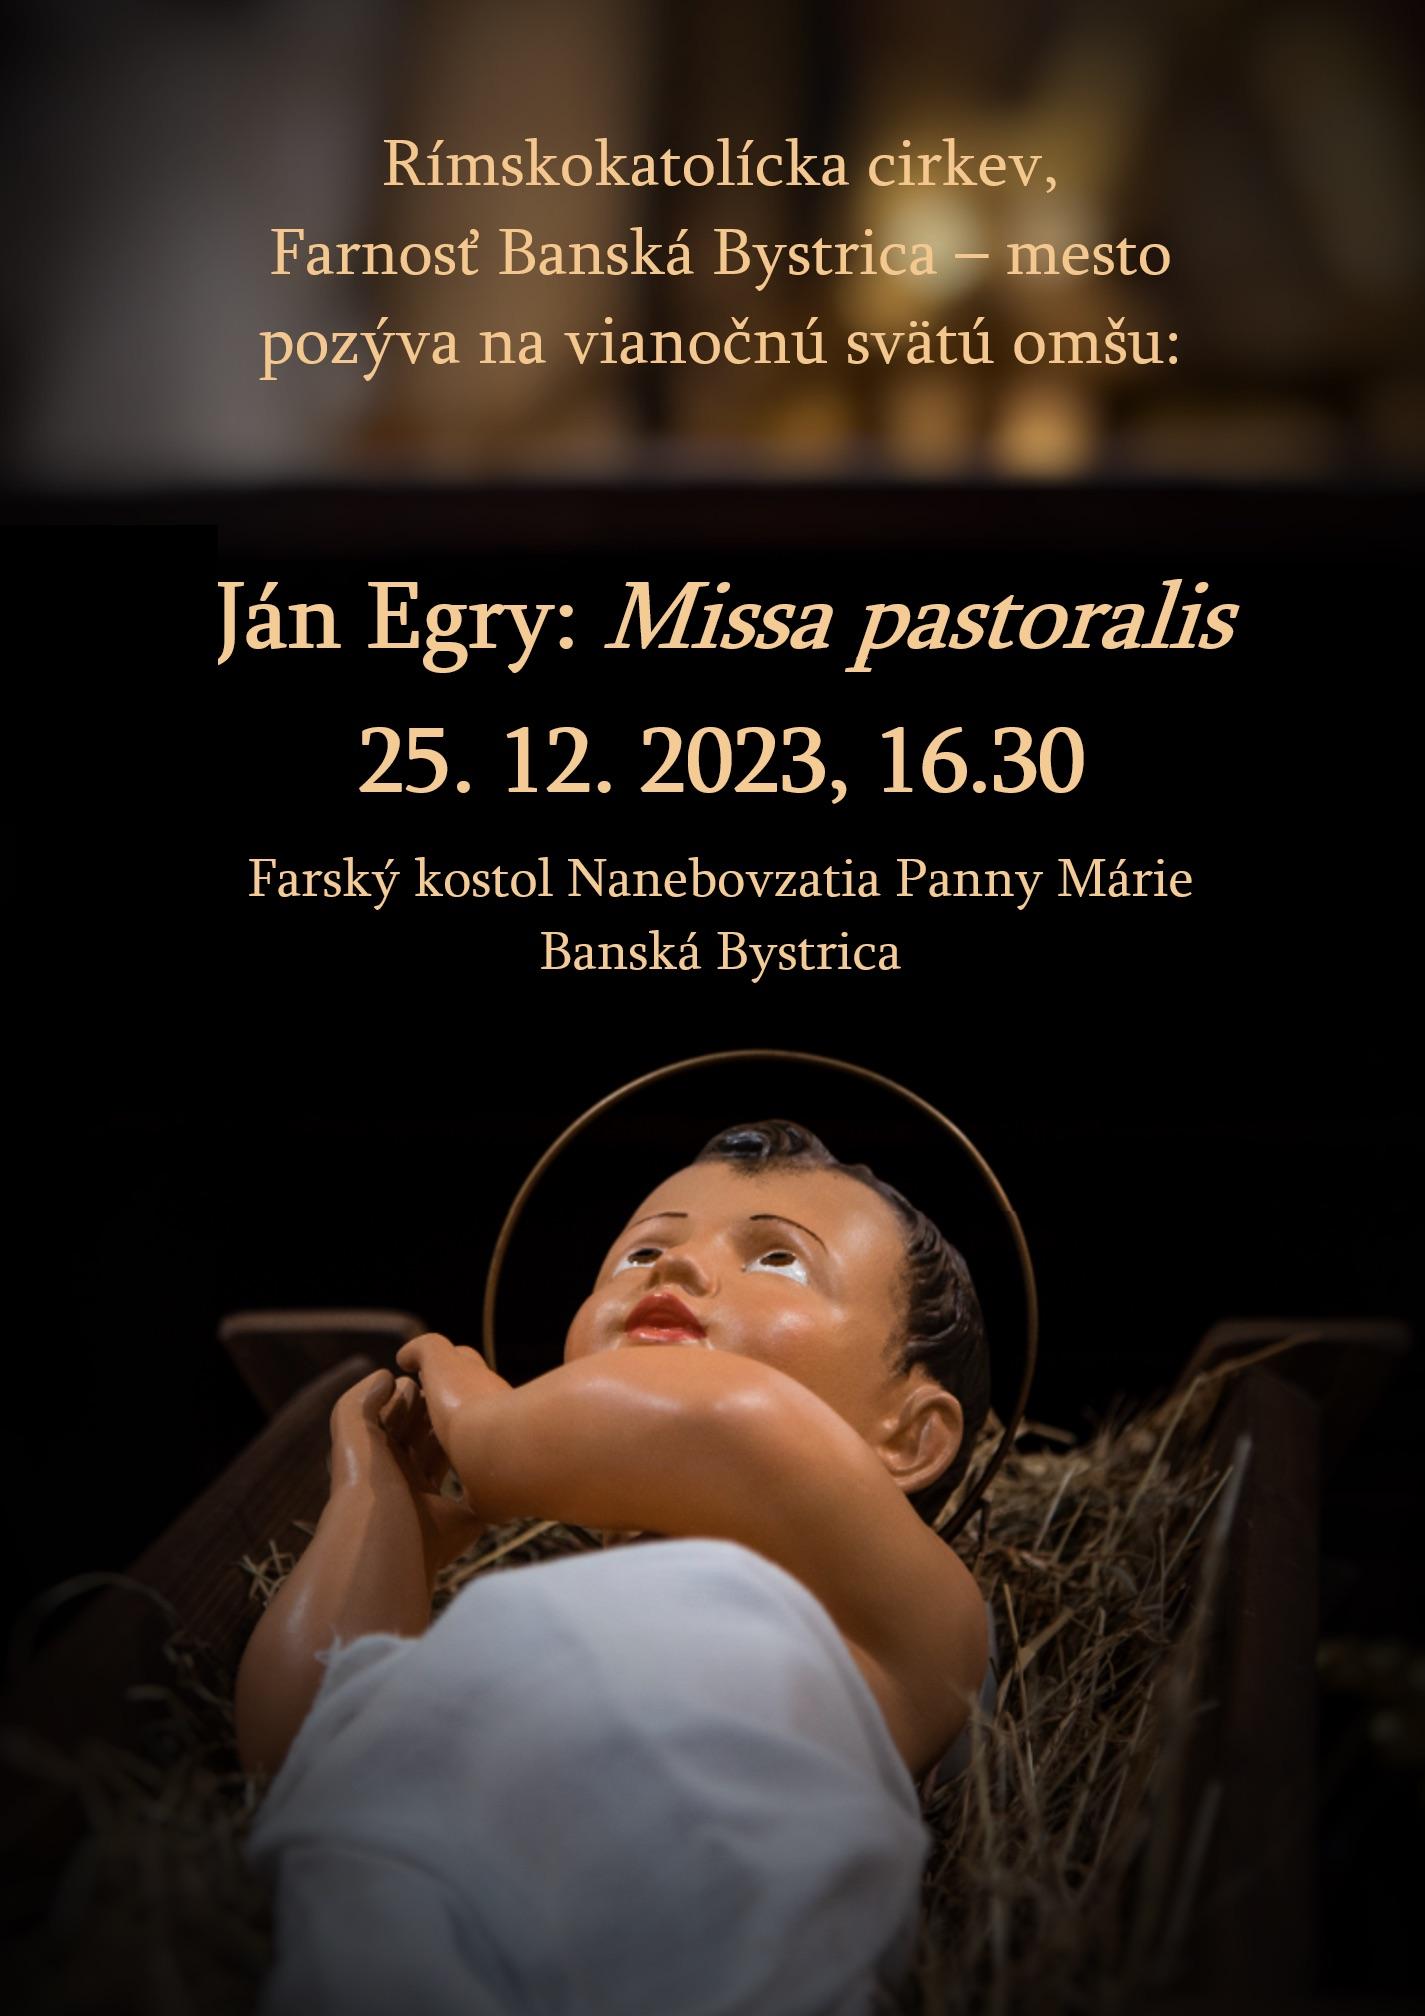 Banska Bystrica, Jan Egry, koncert, omsa, plagat